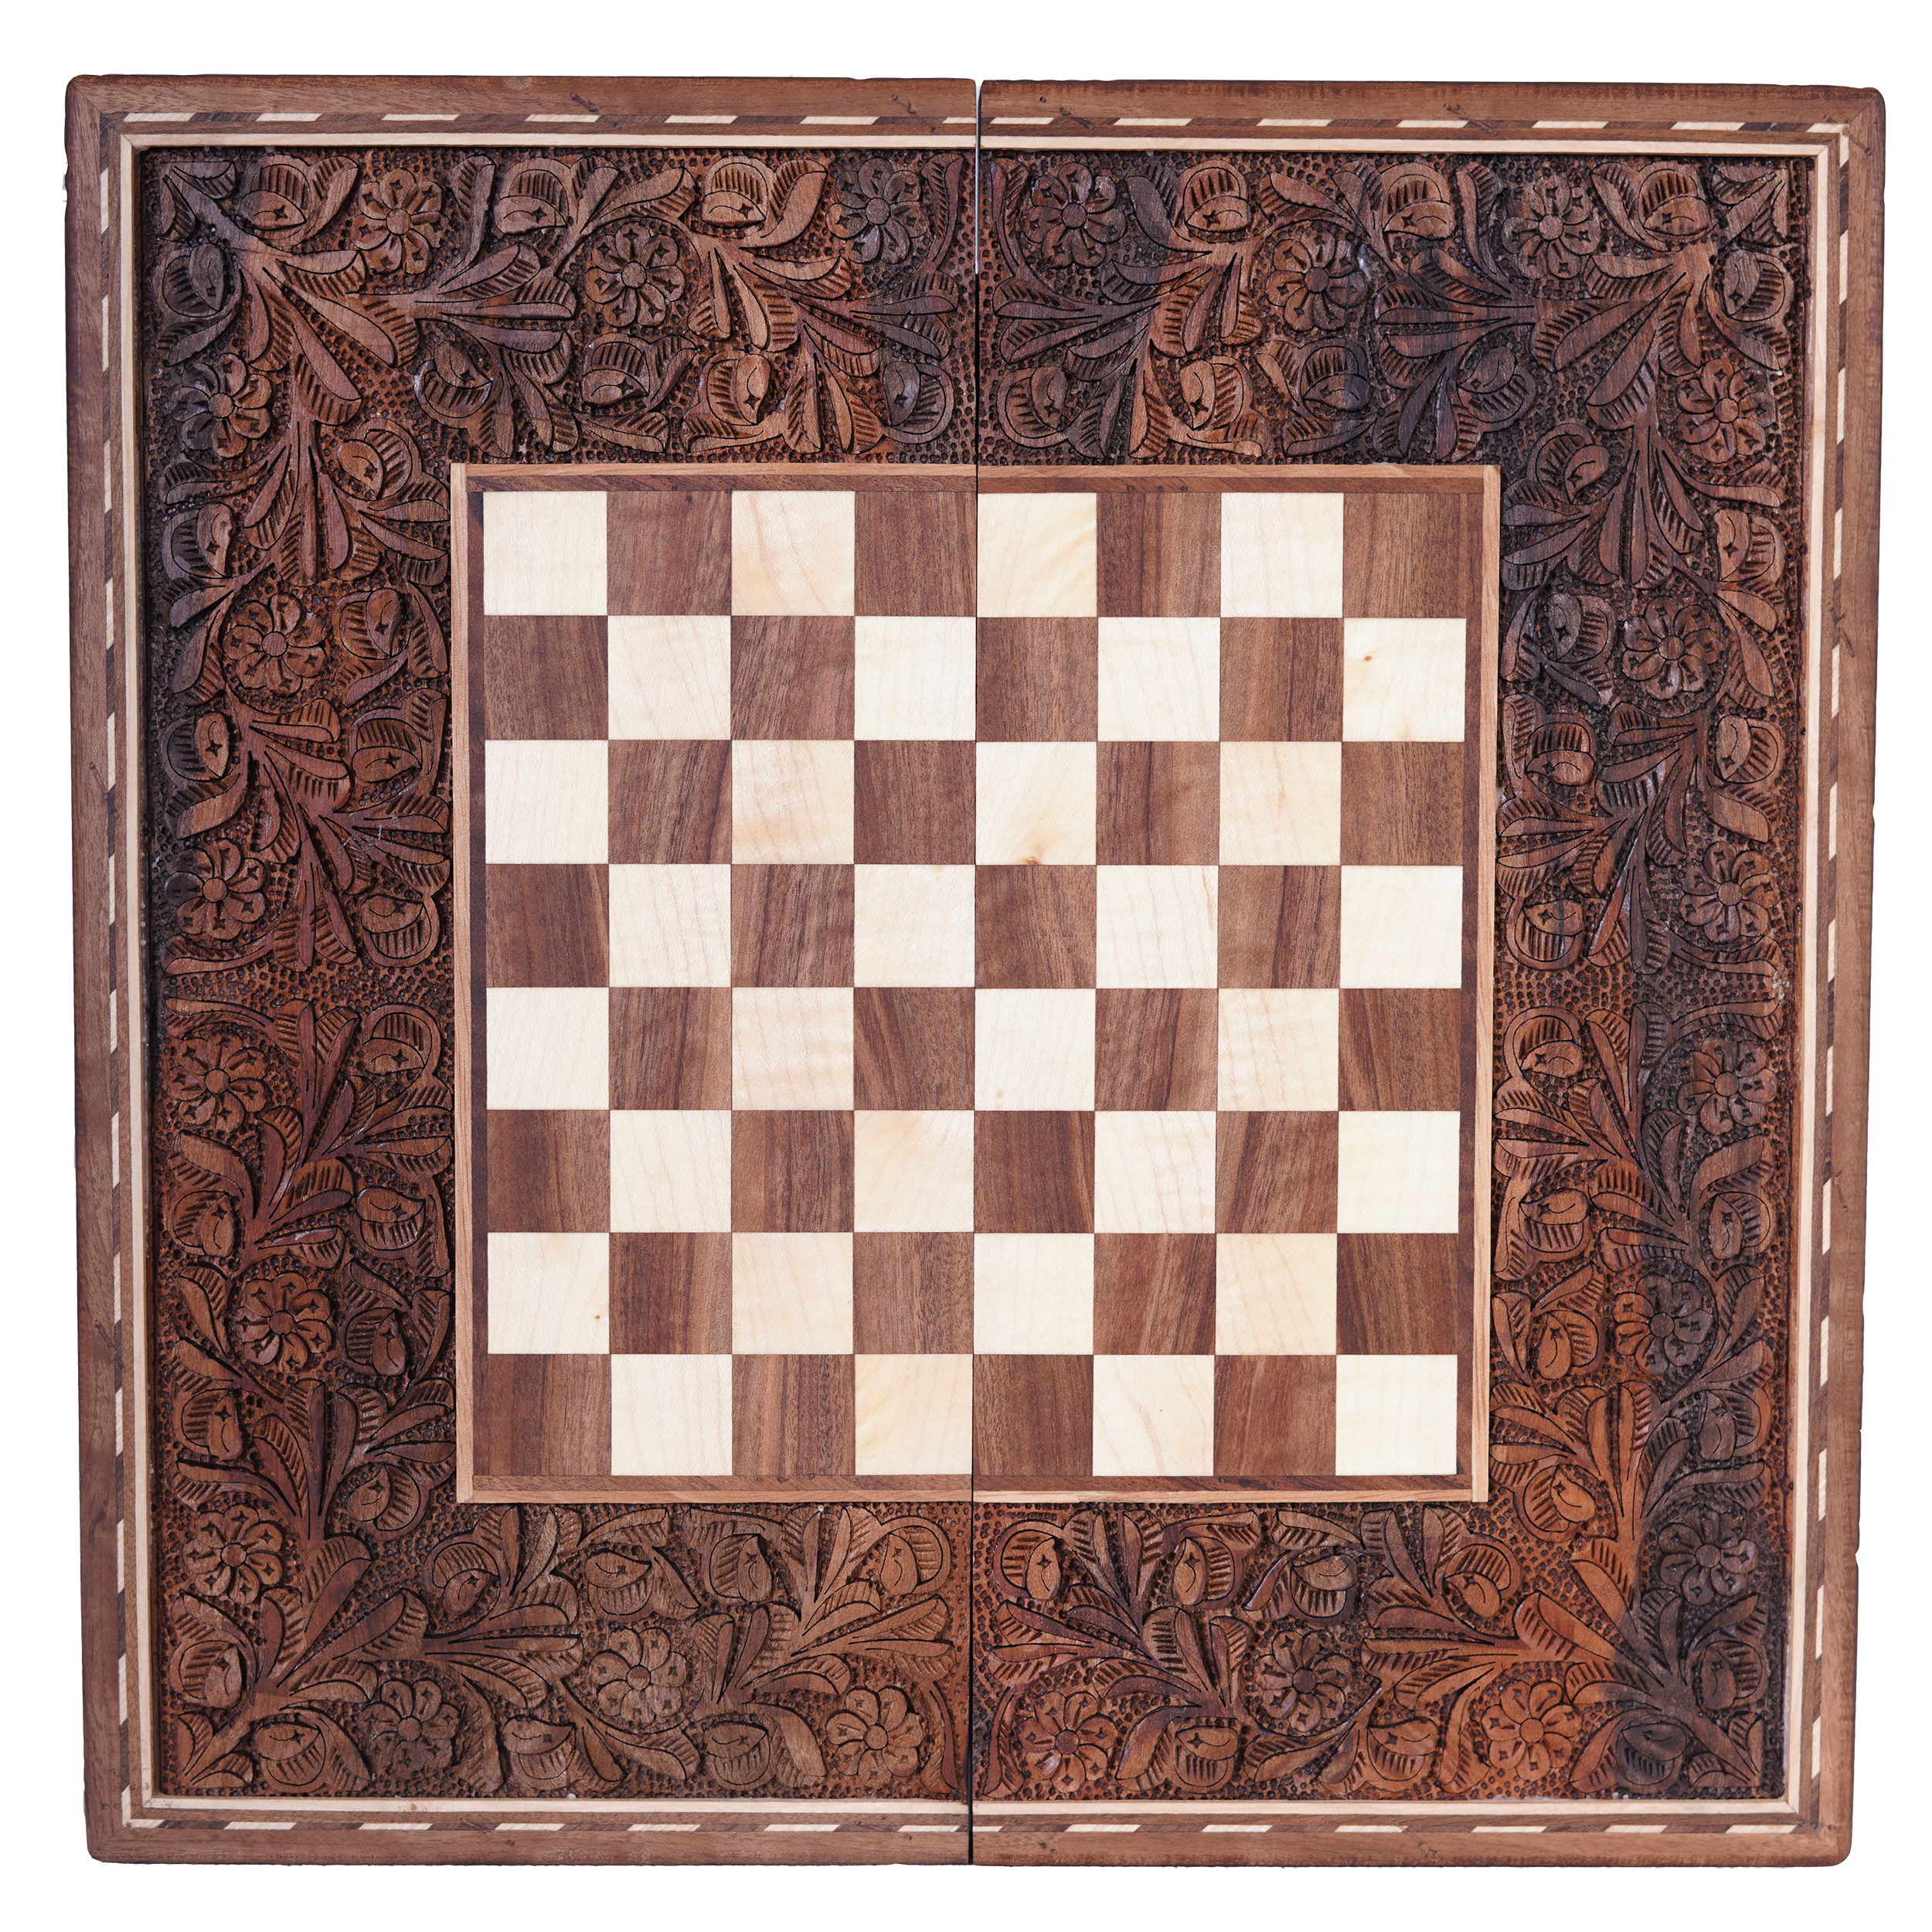 Handmade decorative wood carving chess board, lotus flower model, code 103